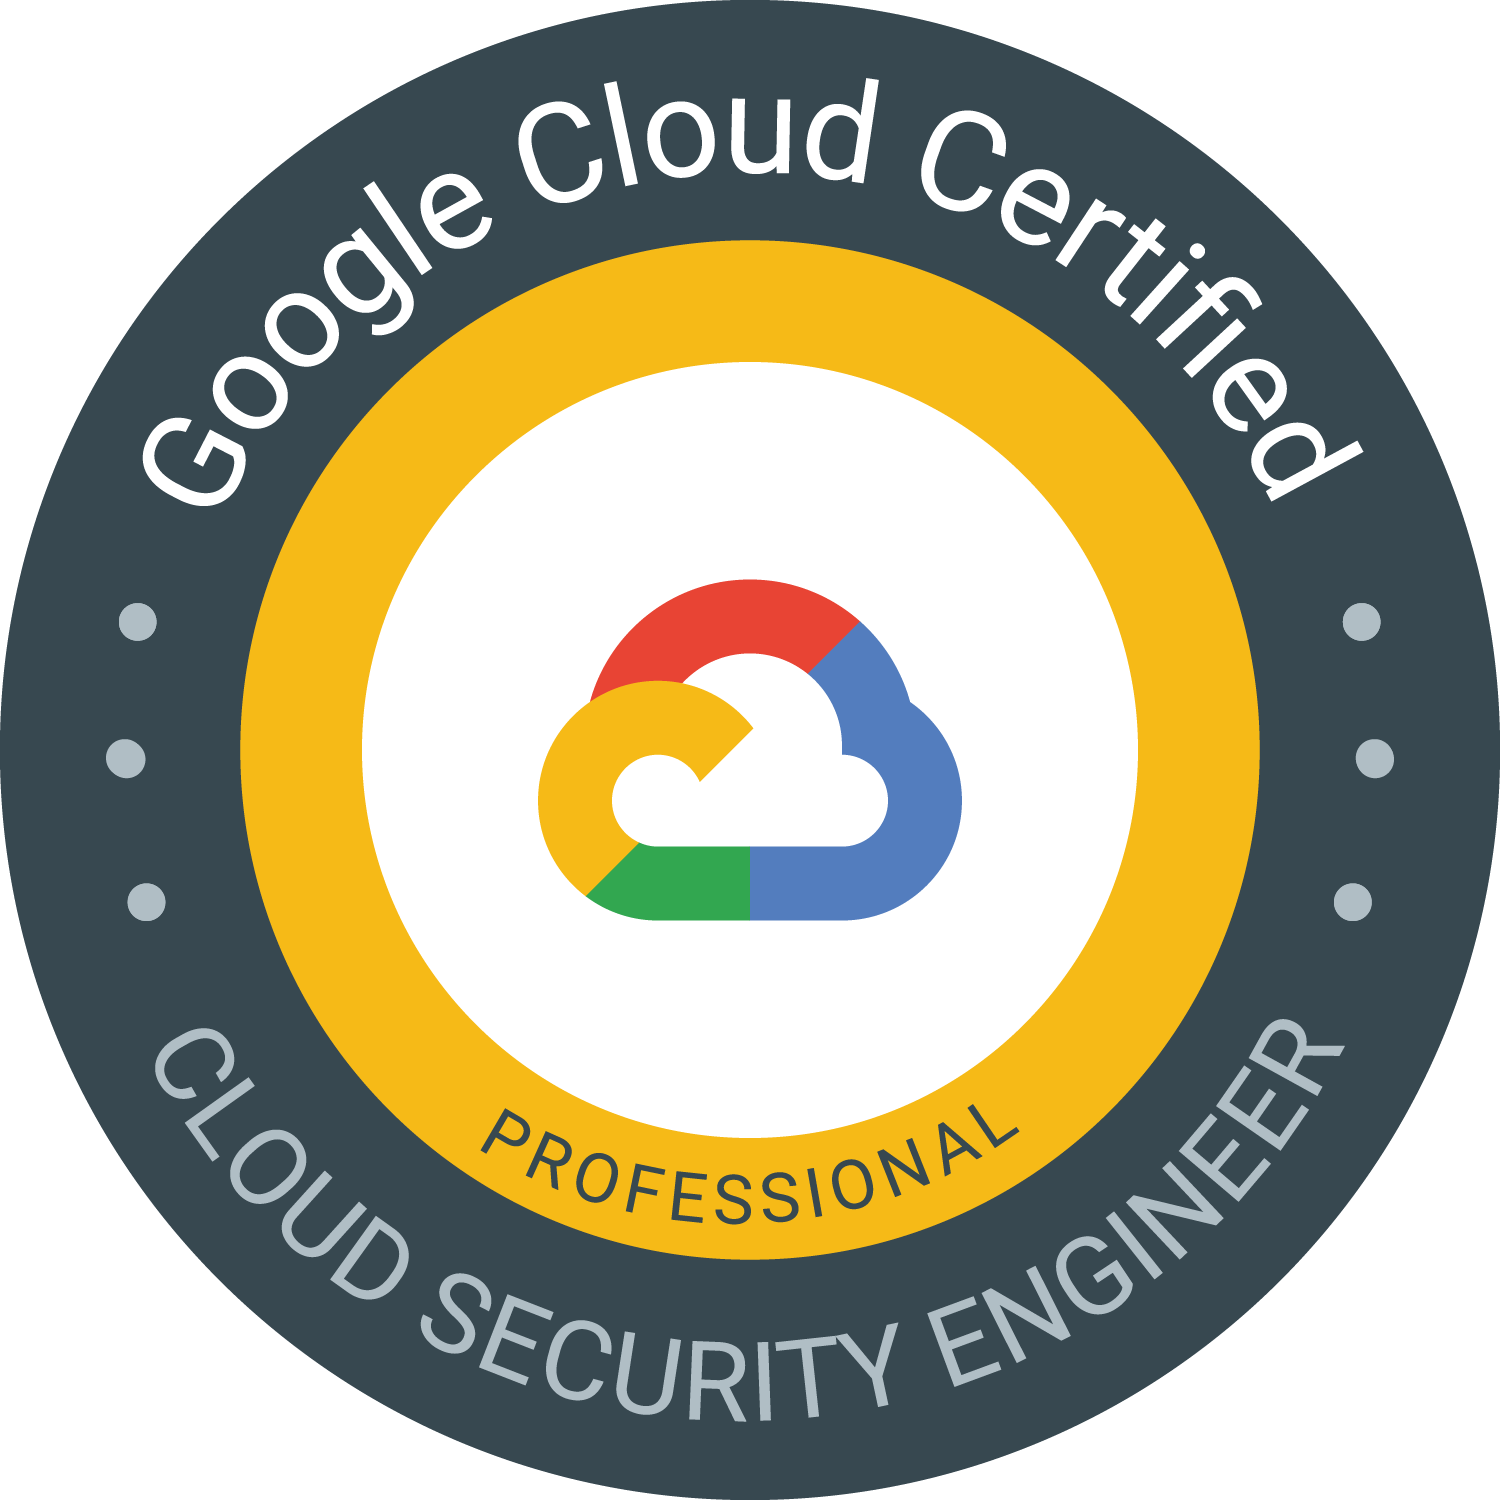 Google Certified Professional Security Engineer